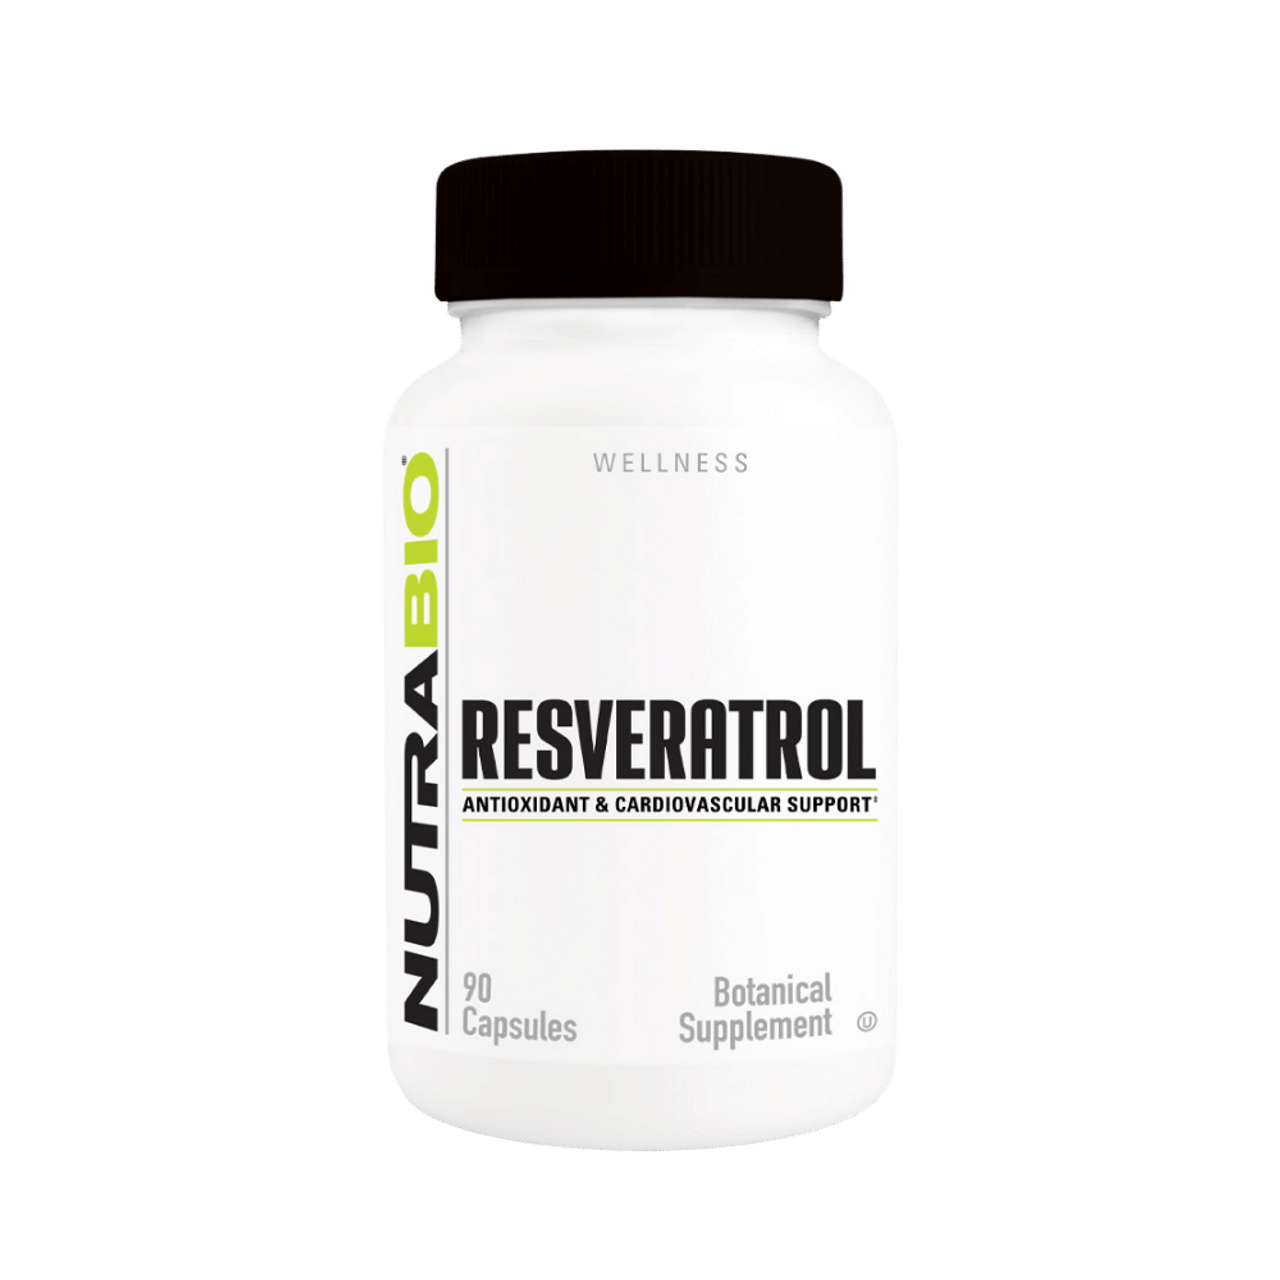 Trans-resveratrol